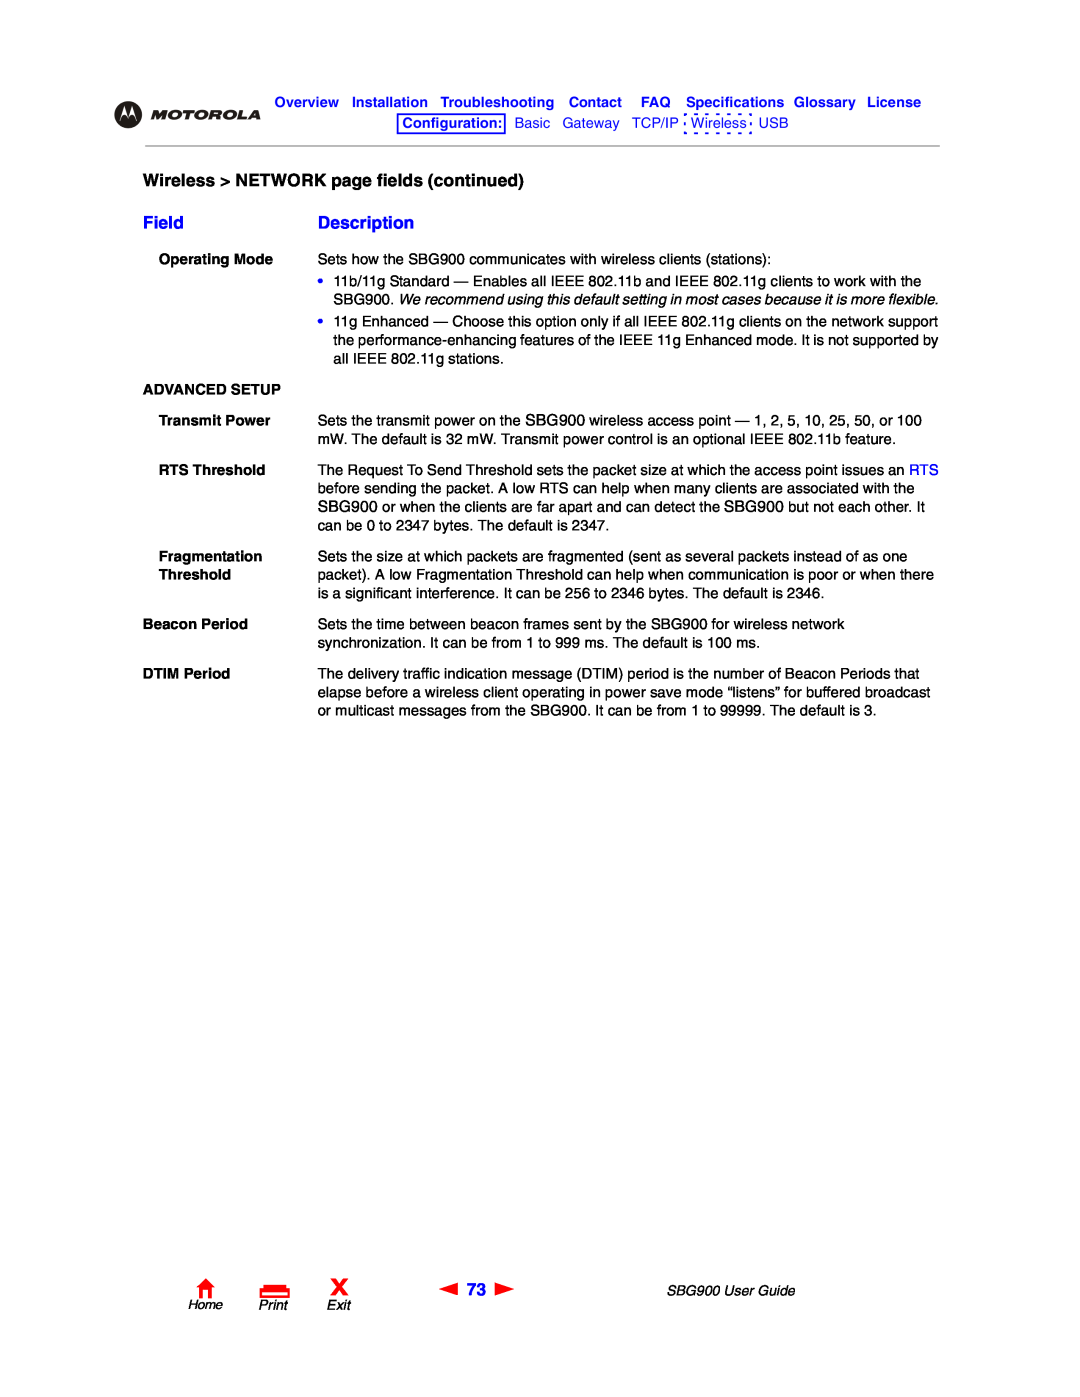 Motorola SBG900 manual Wireless NETWORK page fields continued, FieldDescription, Home Print Exit 